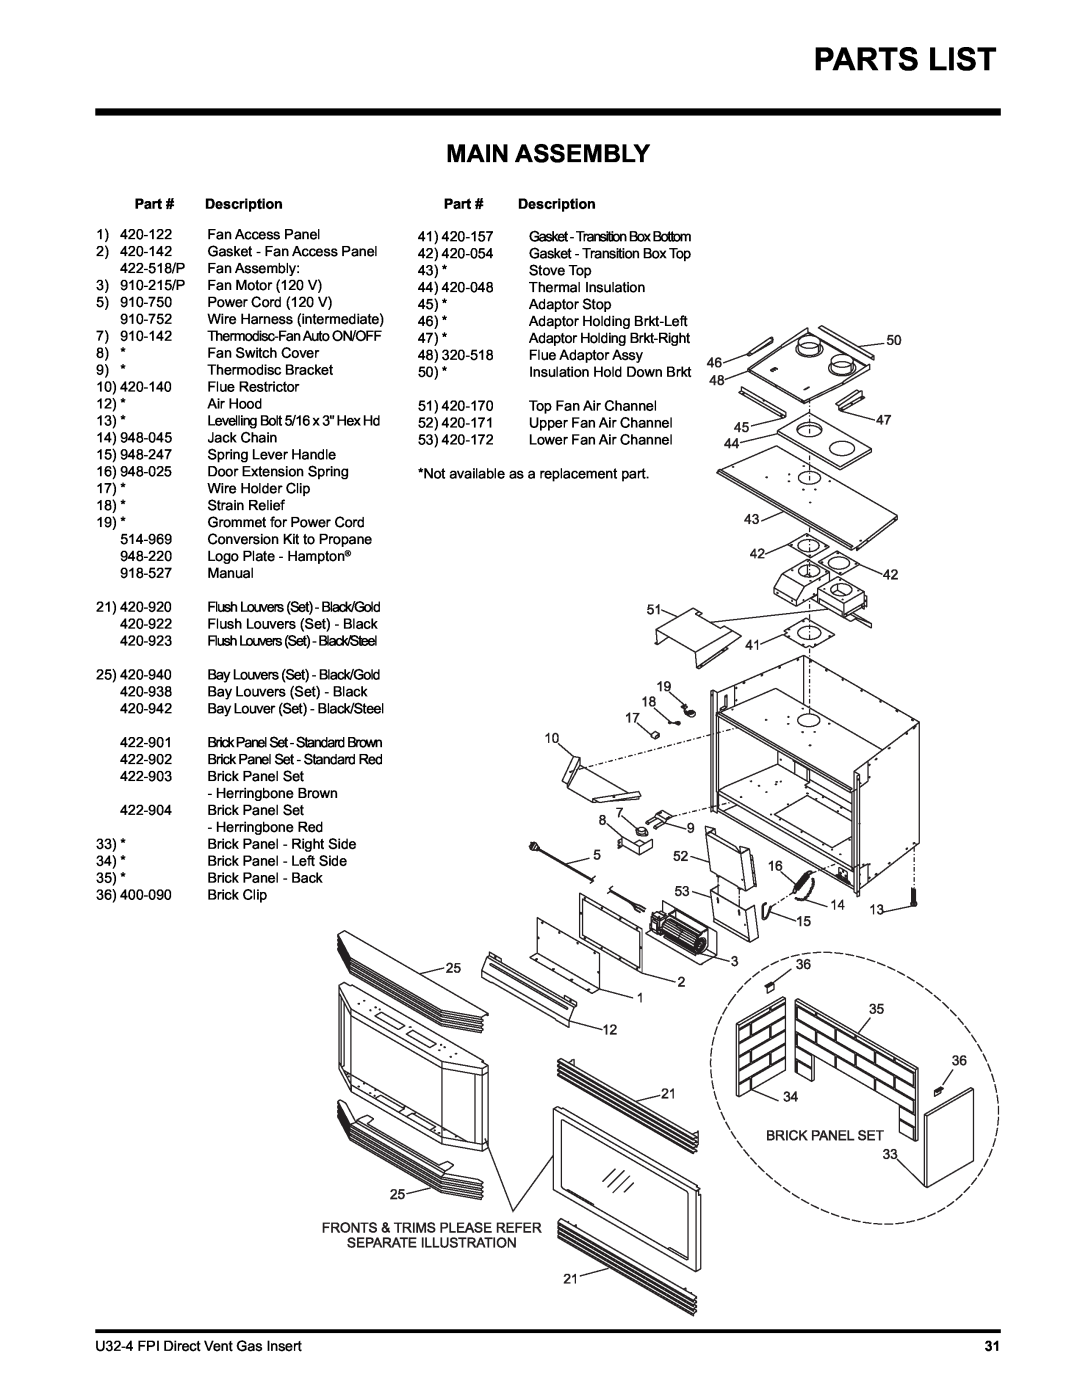 Regency U32-NG4, U32-LP4 installation manual Parts List, Main Assembly, Description 